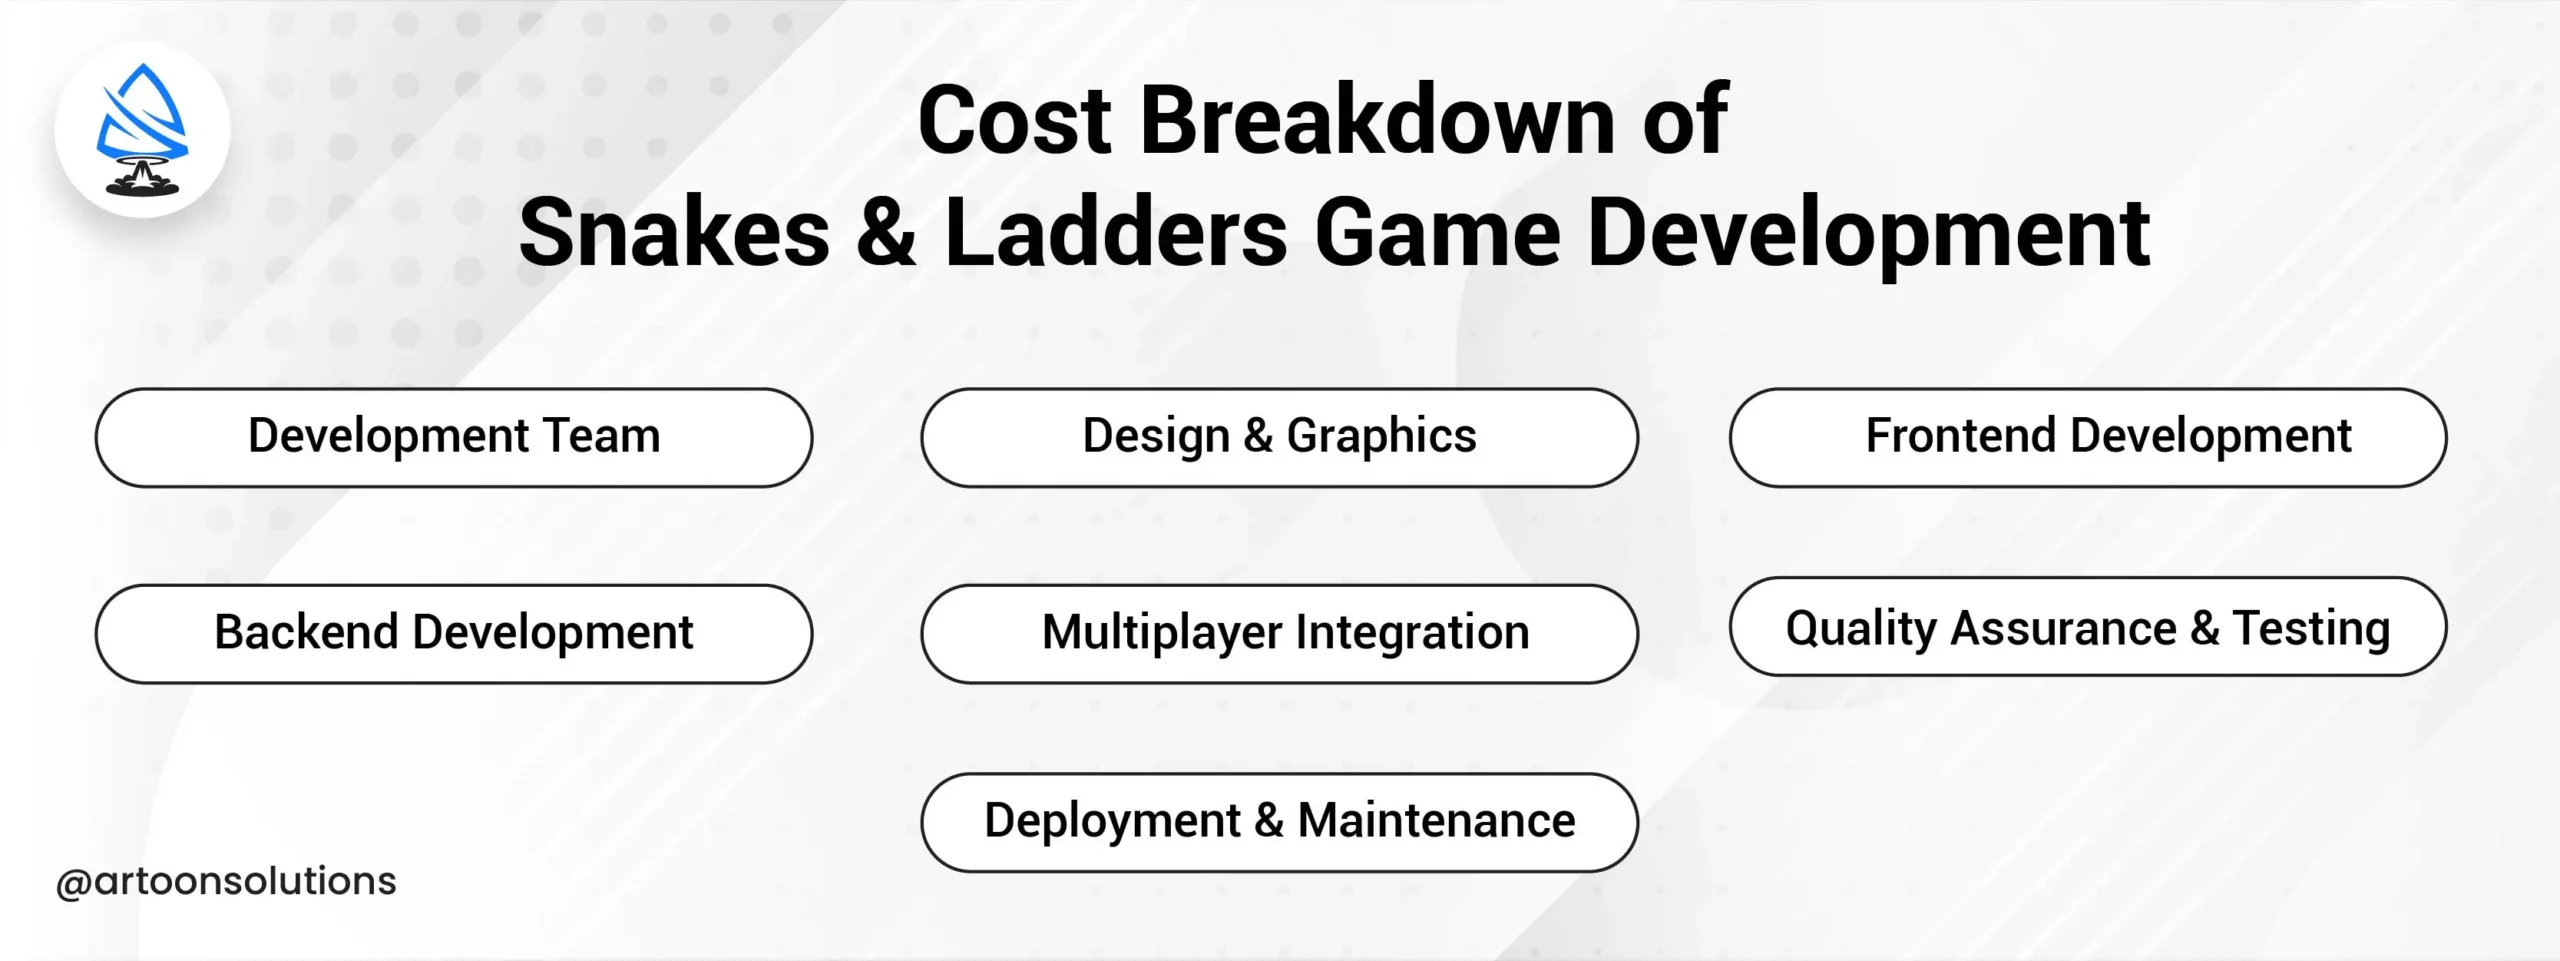 Cost Breakdown of Snakes & Ladders Game Development